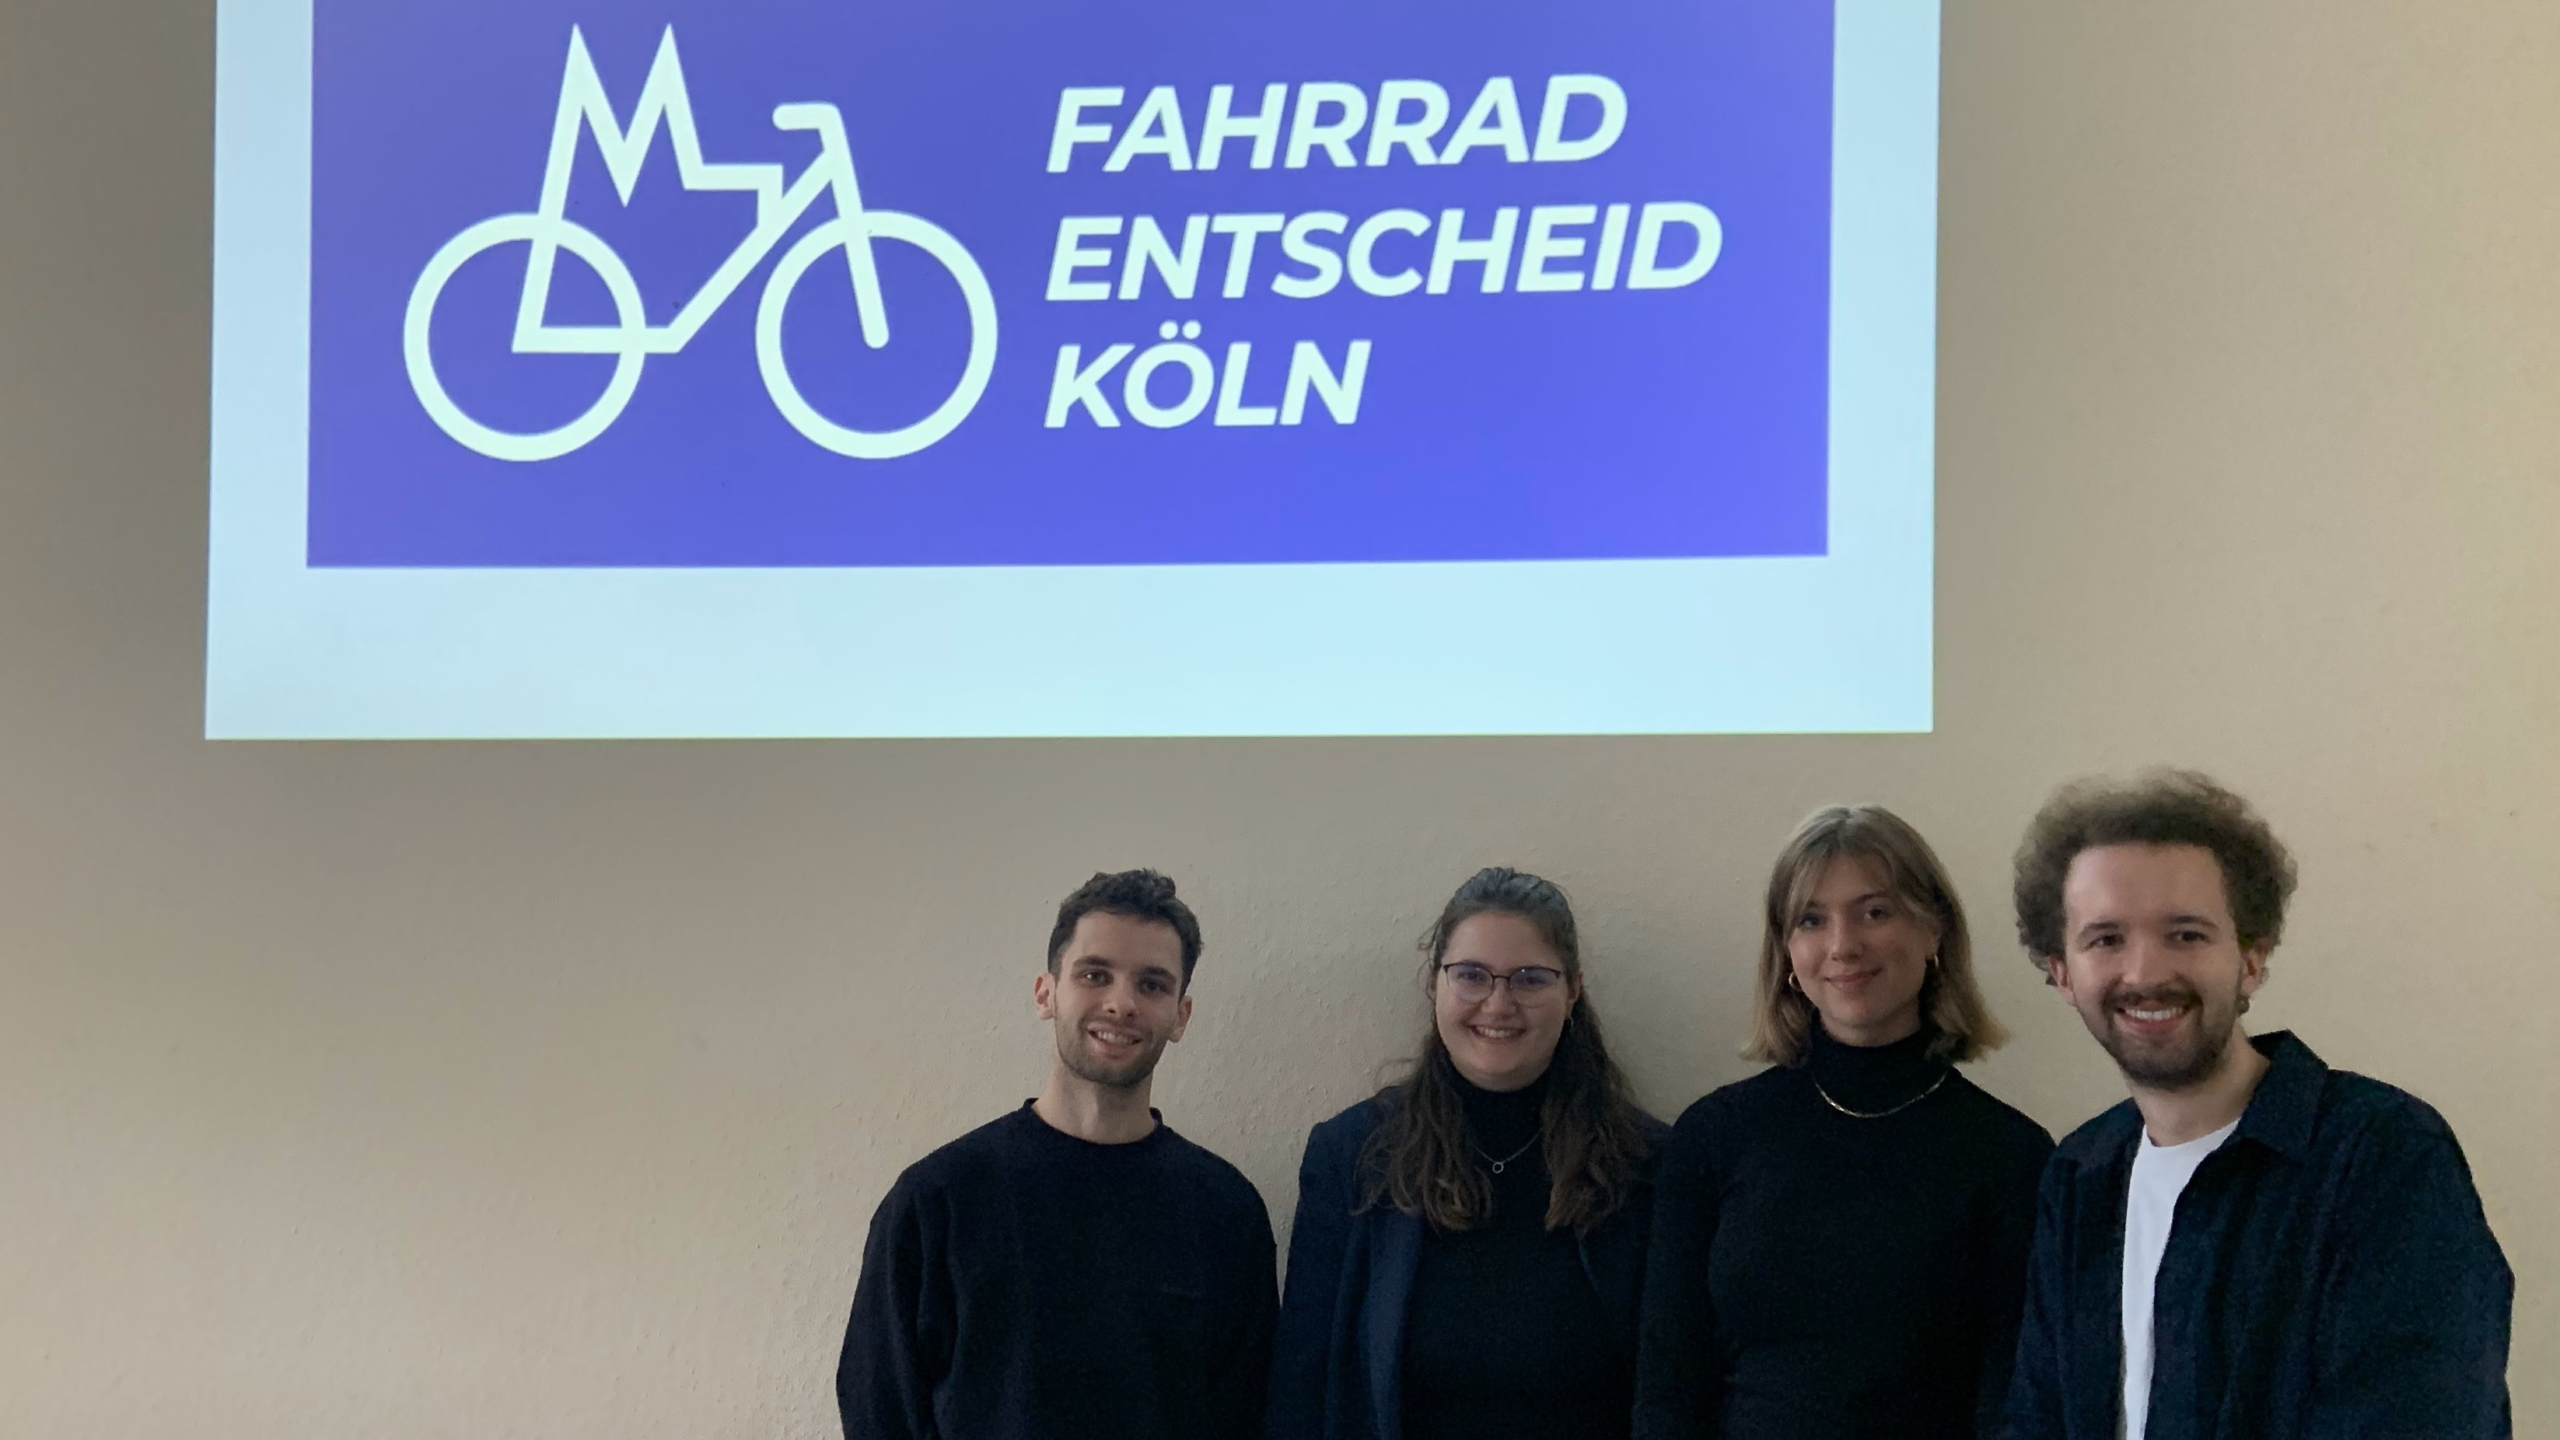 Die Presseprechenden des Fahrrad-Entscheids Köln. Vlnr: Joost Zickler, Natalie Horn, Nina Bönninghaus, Lukas Giesbert